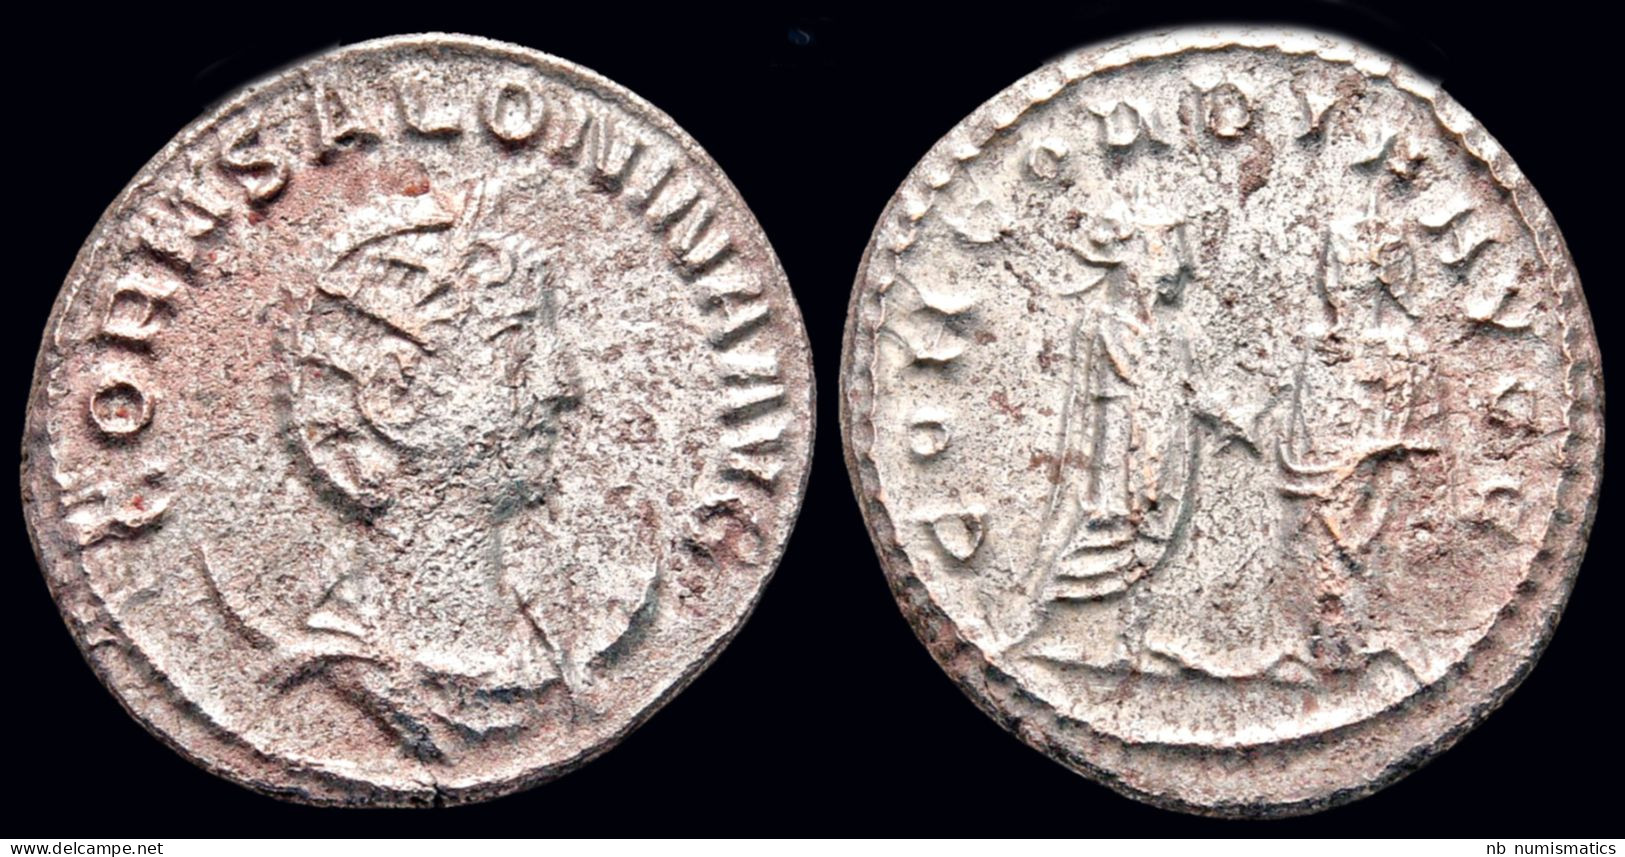 Salonina Billon Antoninianus Gallienus And Salonina Facing Each Other - The Military Crisis (235 AD To 284 AD)